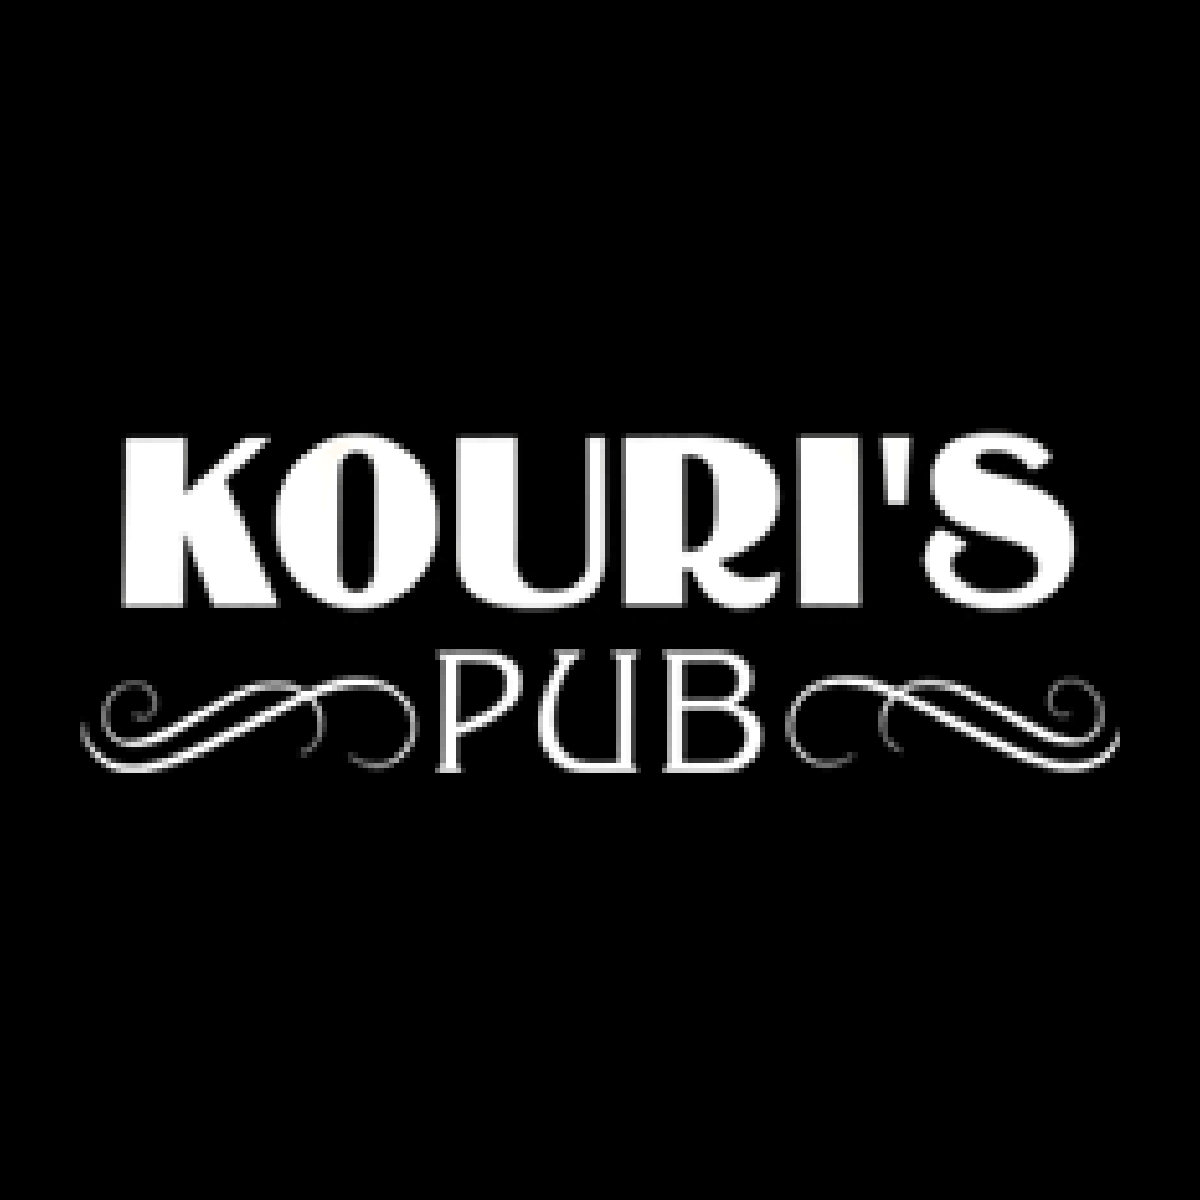 Kouri’s Grille & Bar